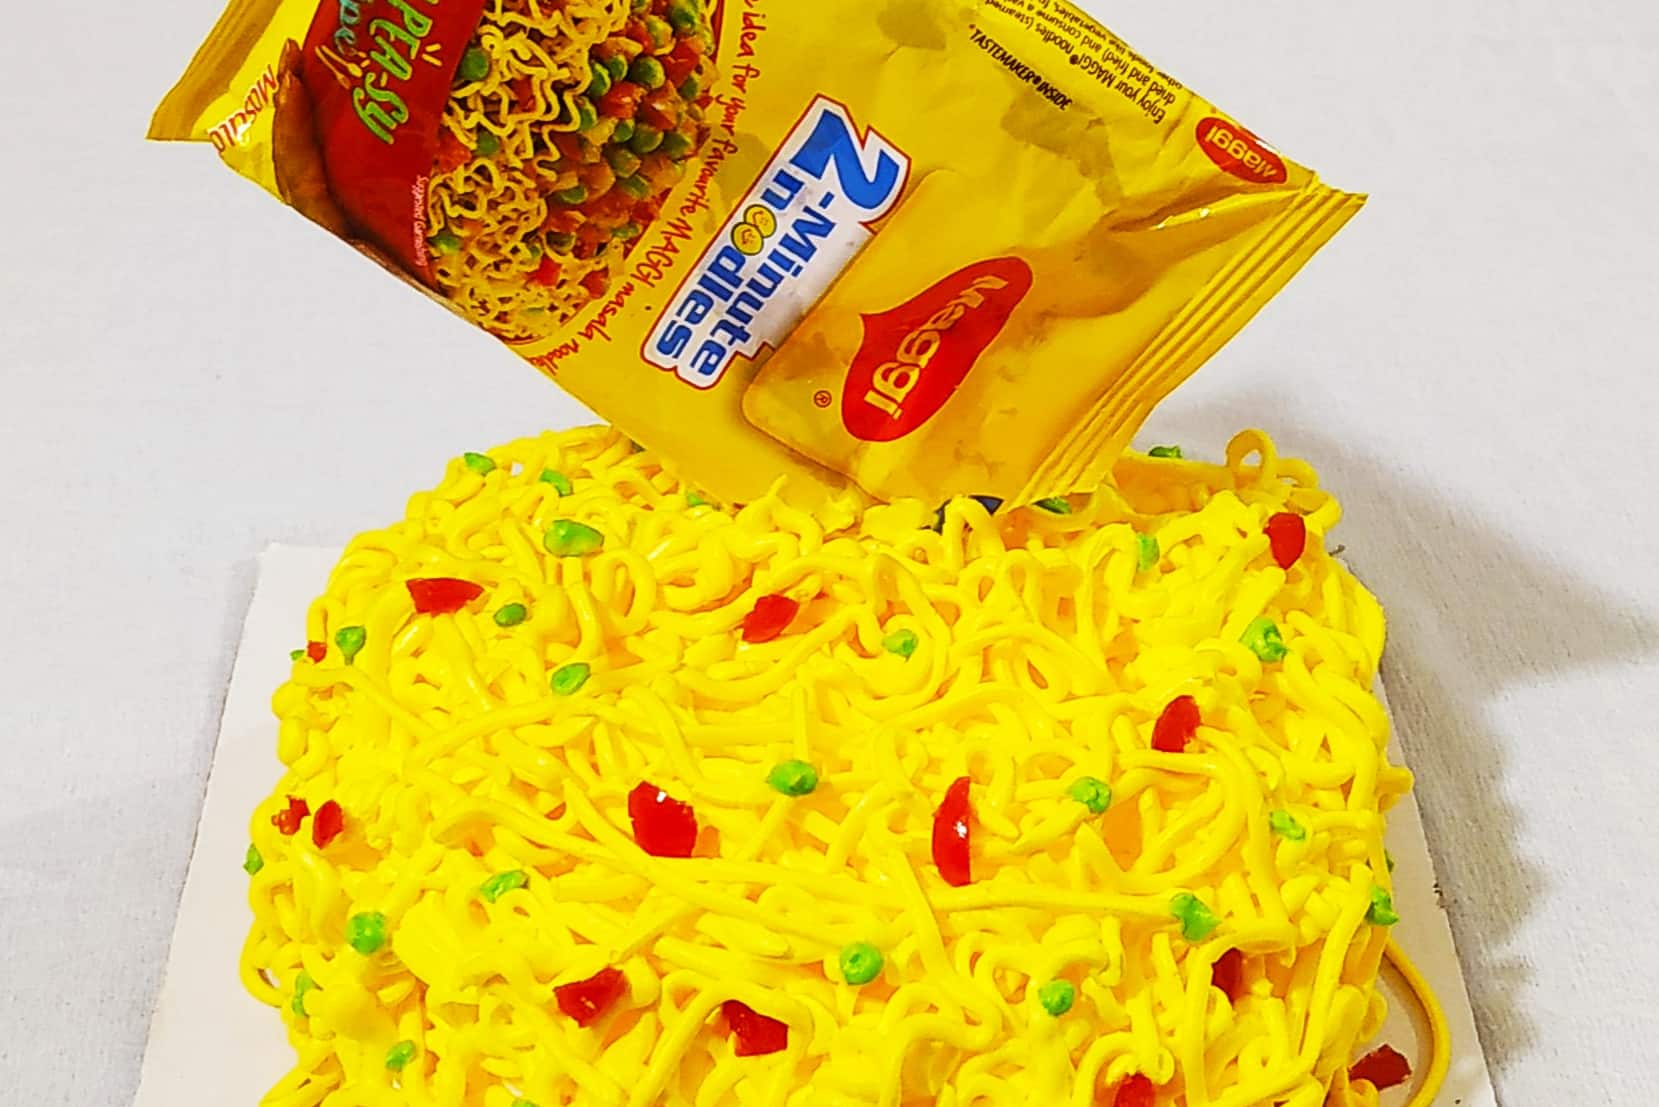 Sarahs Kitchen Cake And Bake, Rudrapur Locality order online - Zomato